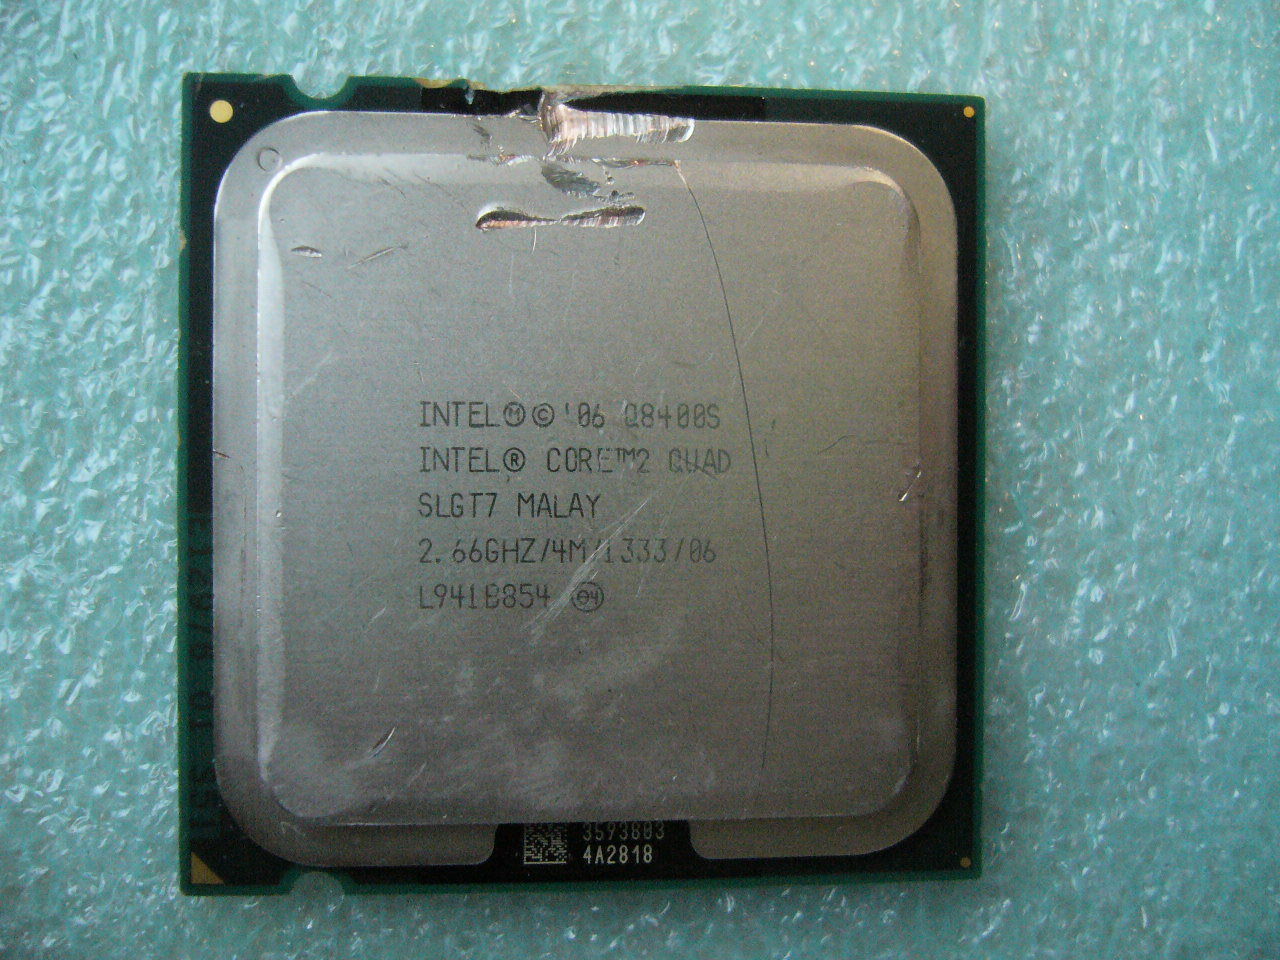 QTY 1x INTEL Core2 Quad Q8400S CPU 2.66GHz/4MB/1333Mhz LGA775 SLGT7 65W damaged - Click Image to Close